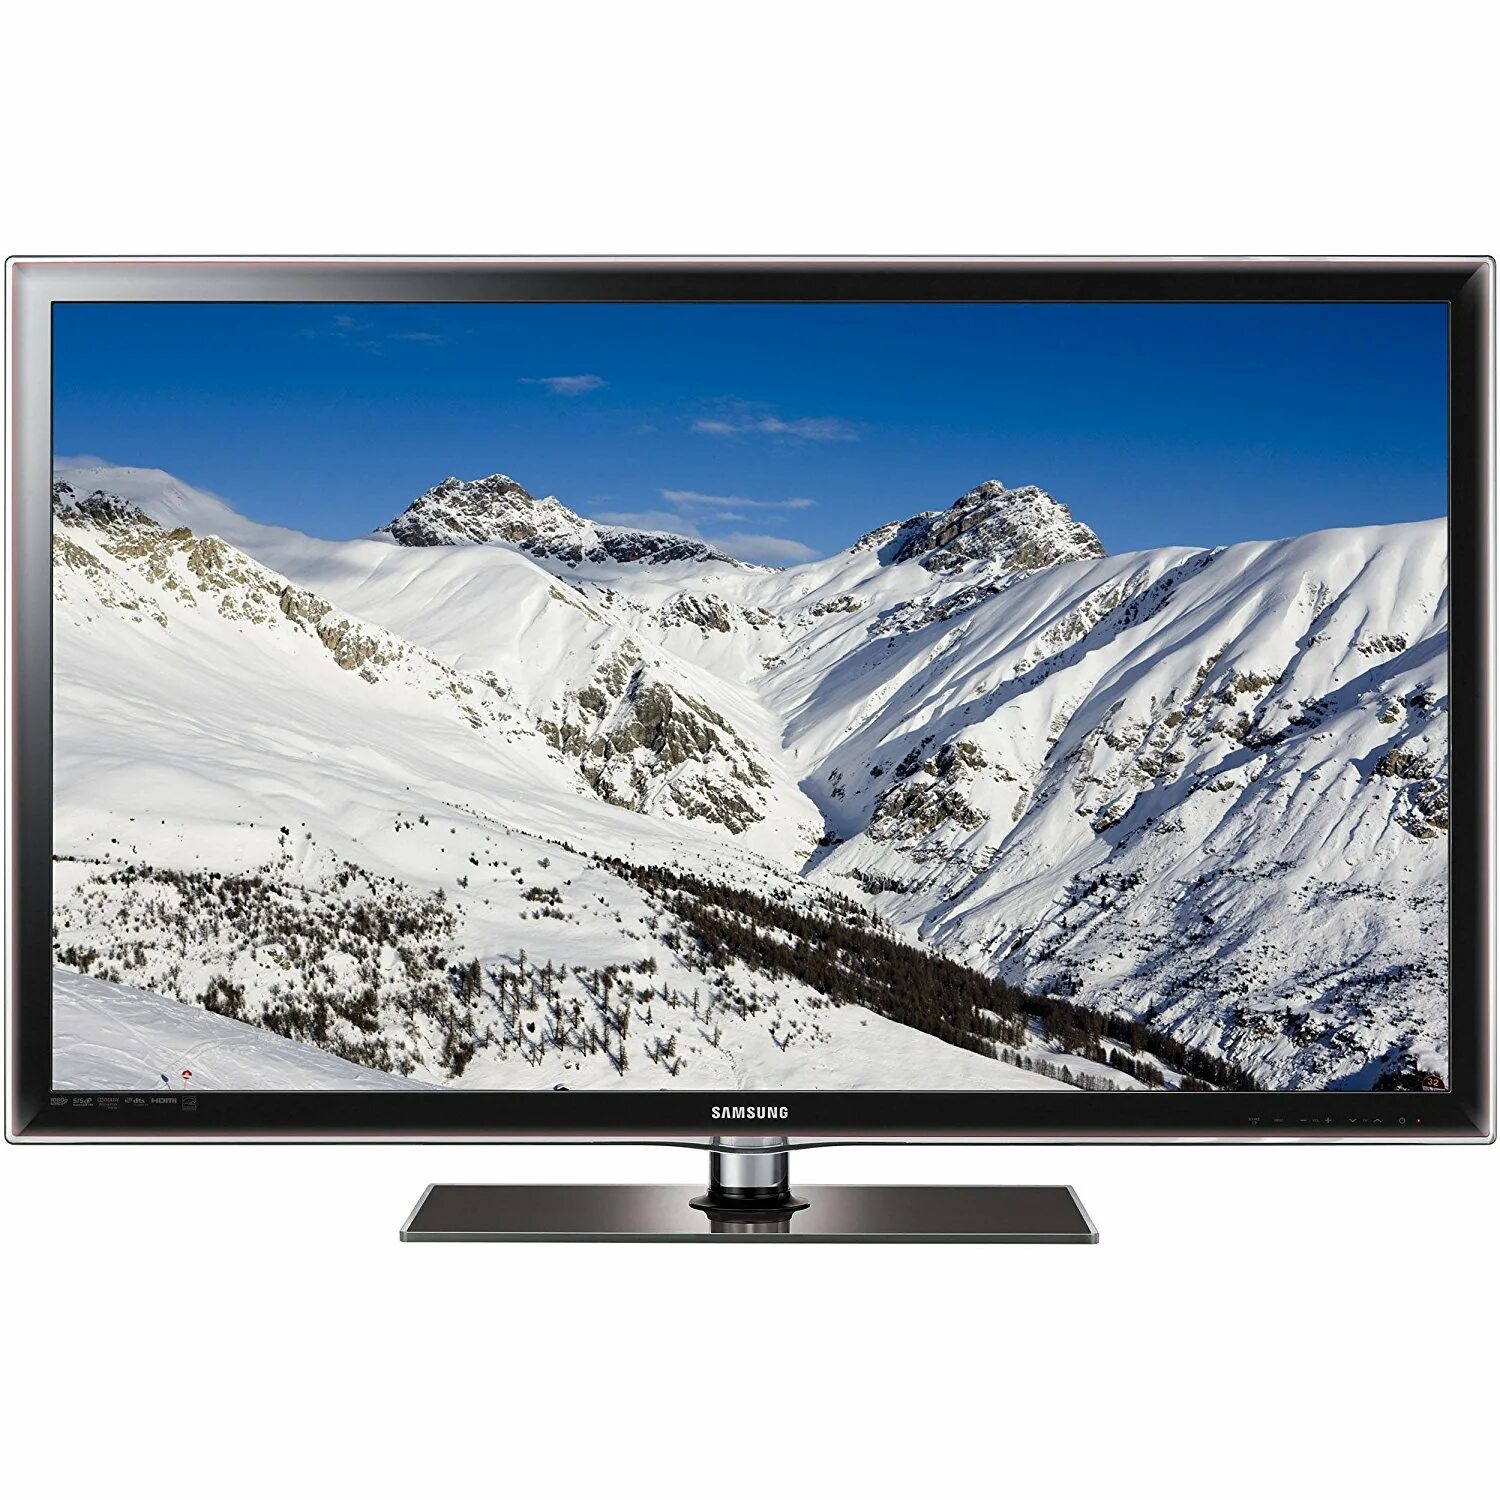 Samsung led 46 Smart TV. Samsung 40 дюймов Smart TV. Телевизор самсунг смарт ТВ 40. Samsung led 40 Smart TV 2013.